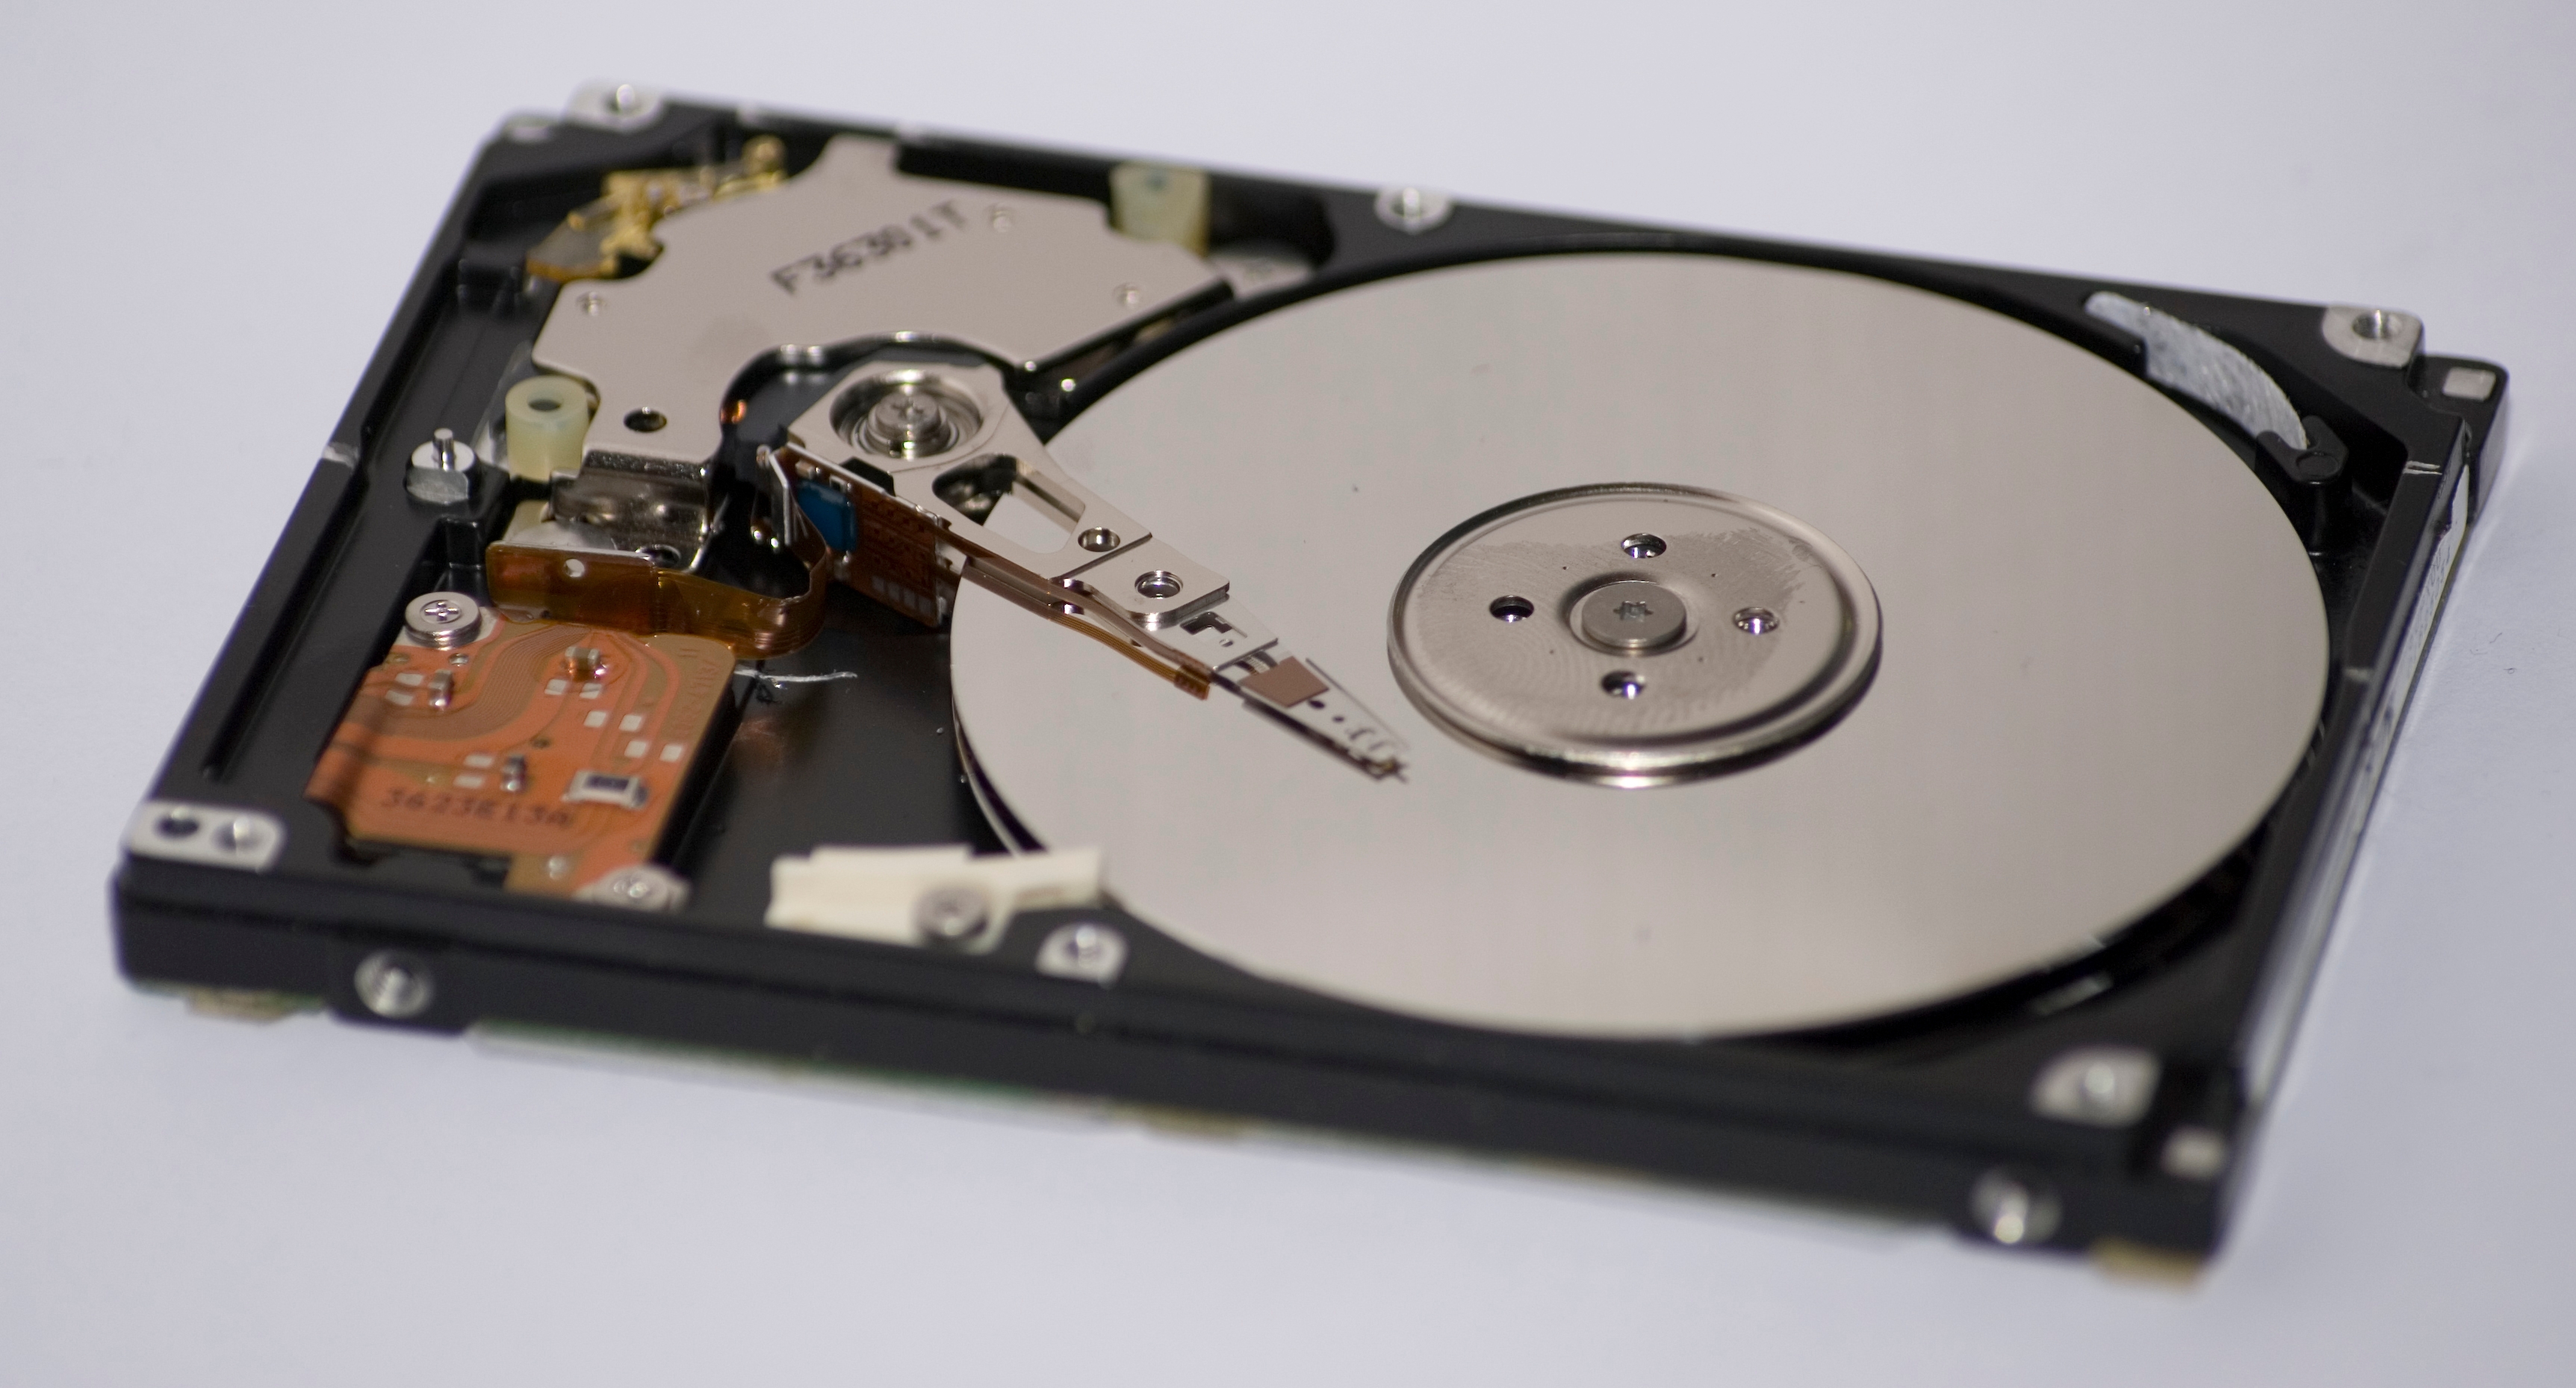 A photo of a computer hard drive